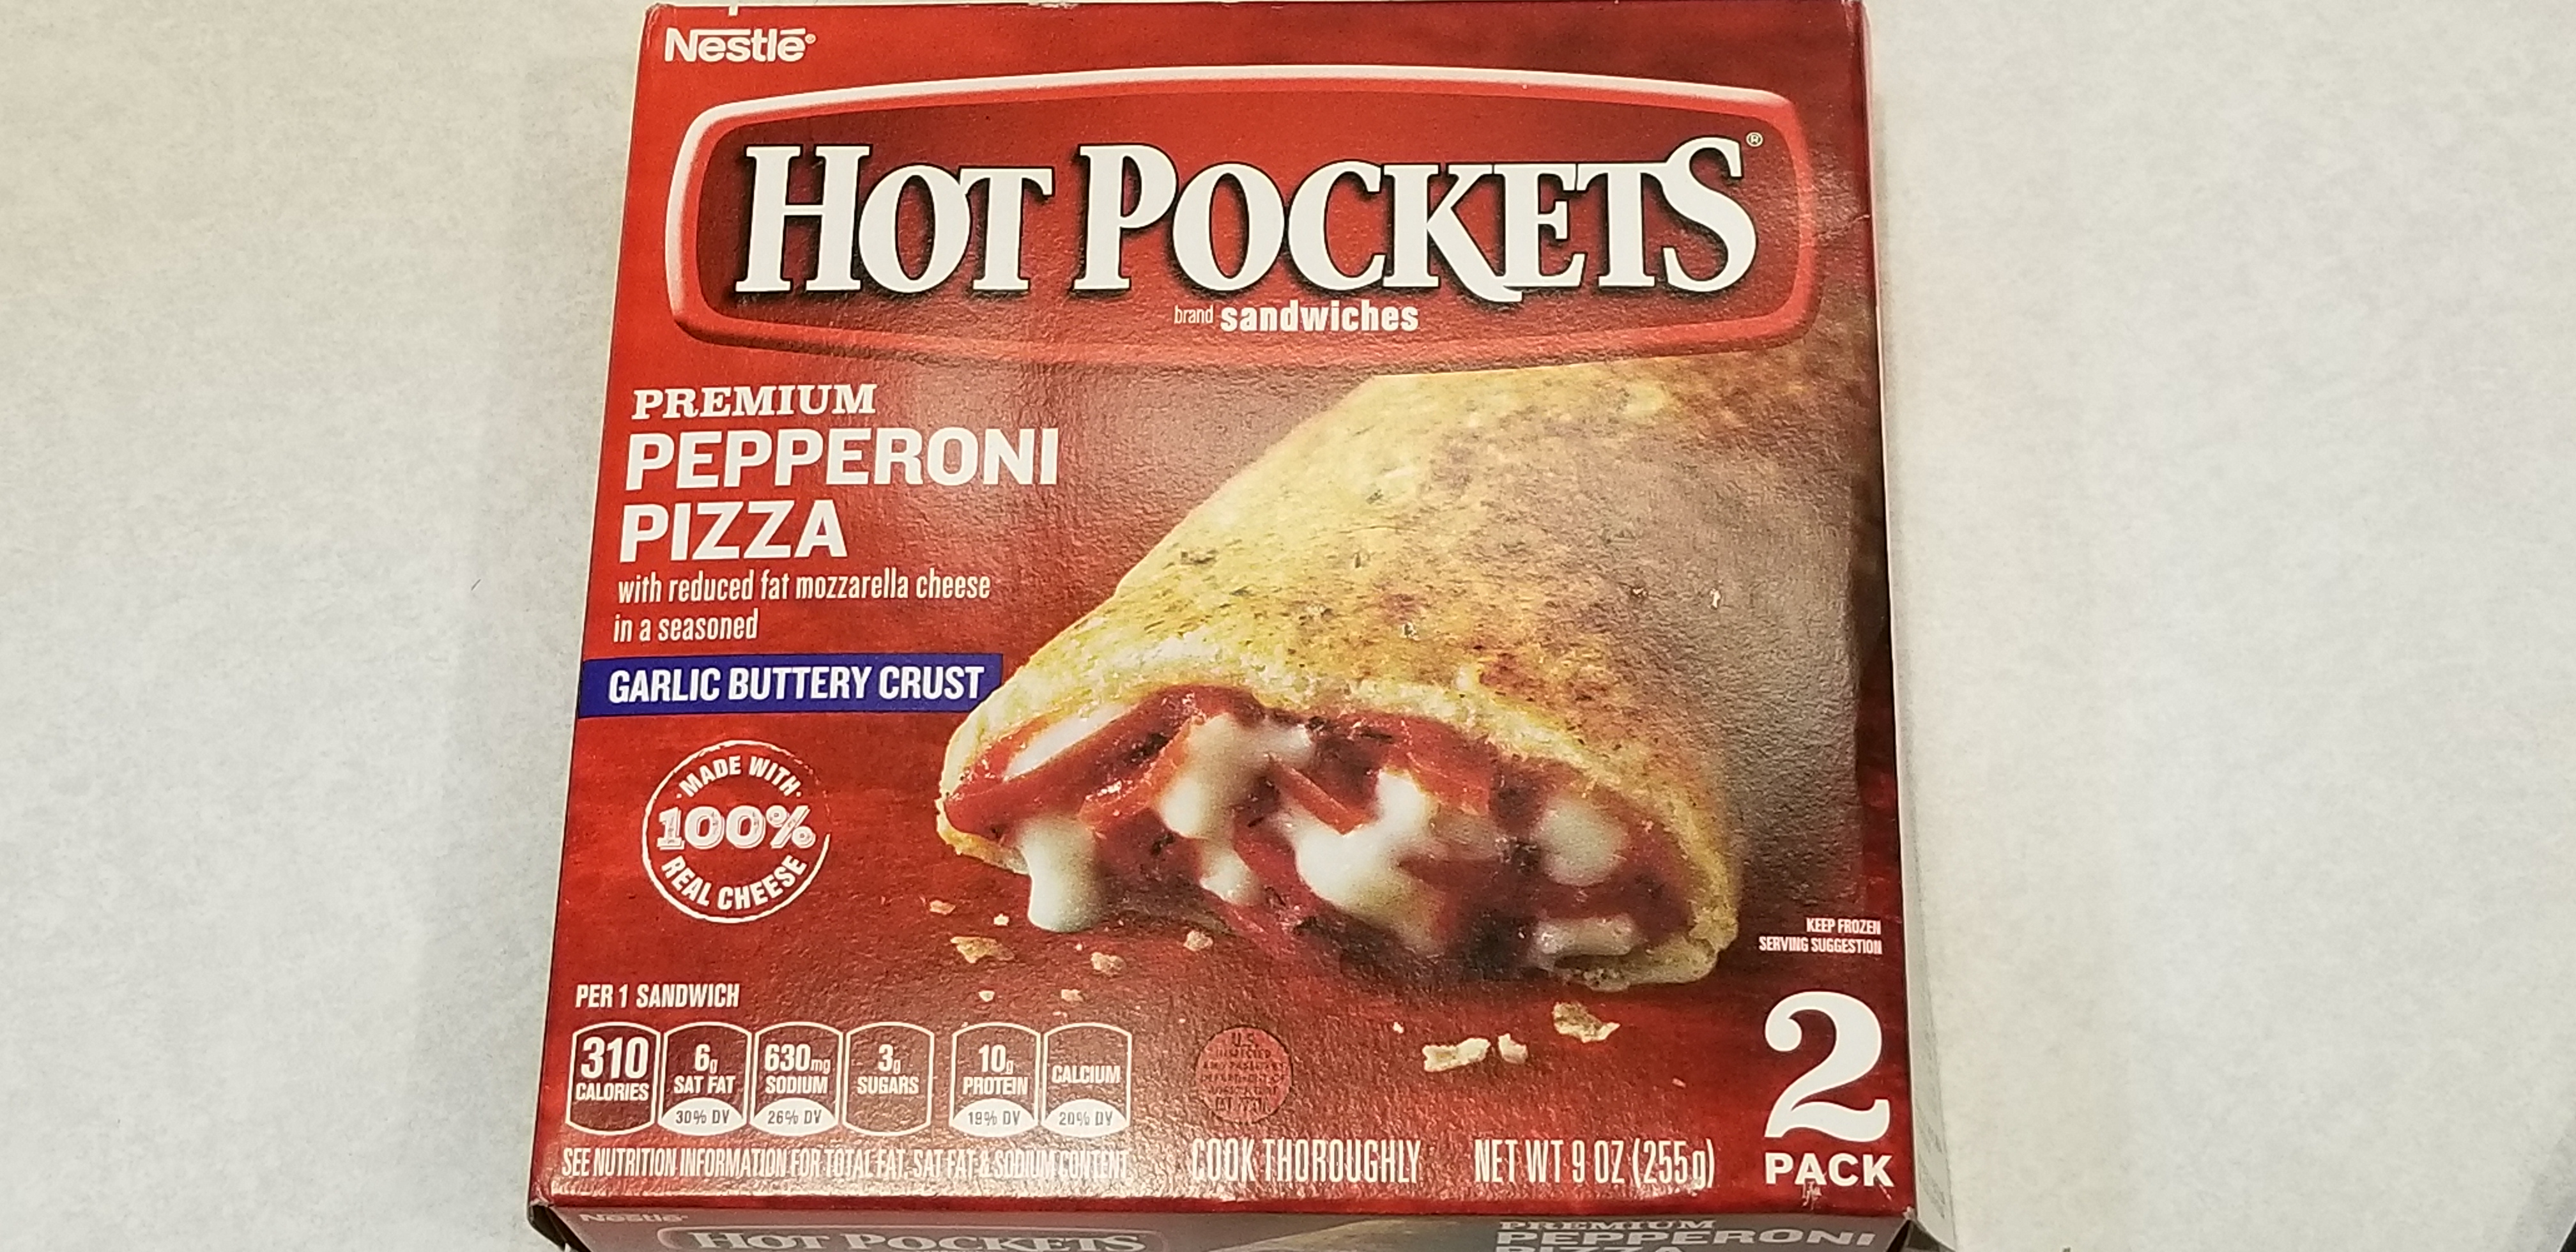 Hot Pockets Premium Pepperoni Pizza